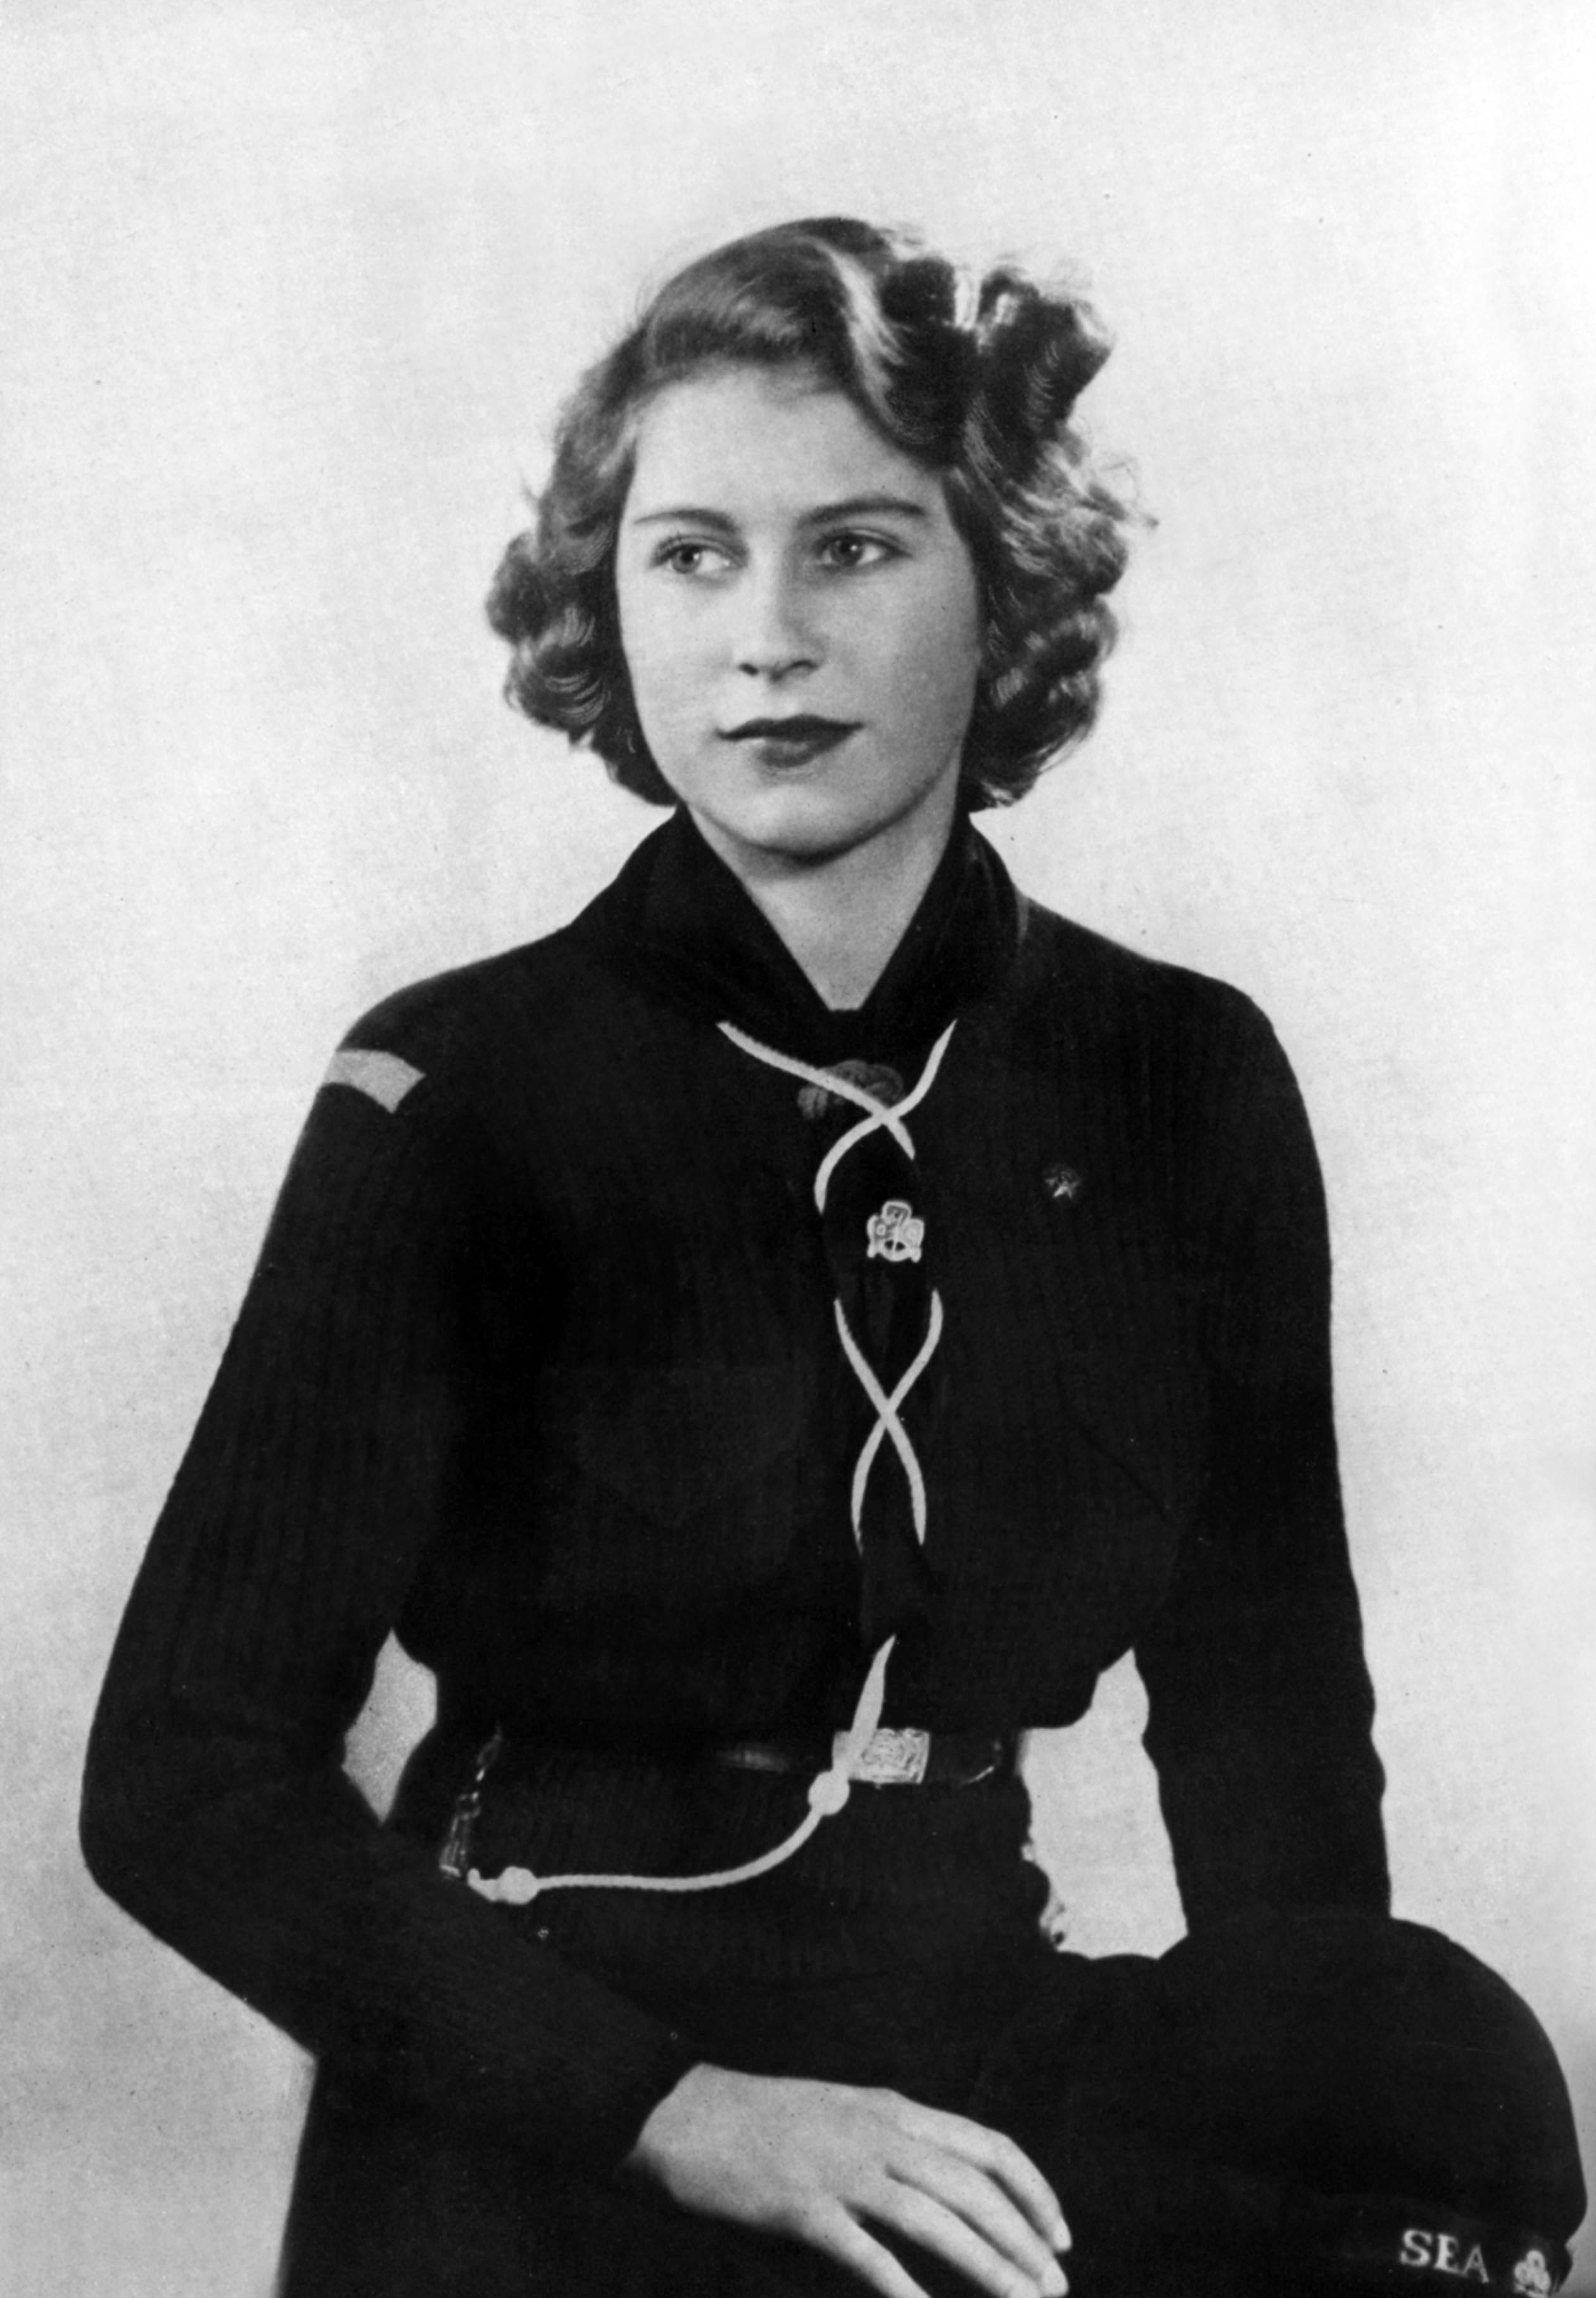 Princess Elizabeth of England (future queen Elizabeth II) wearing girl scout uniform in 1943. | Source: Getty Images